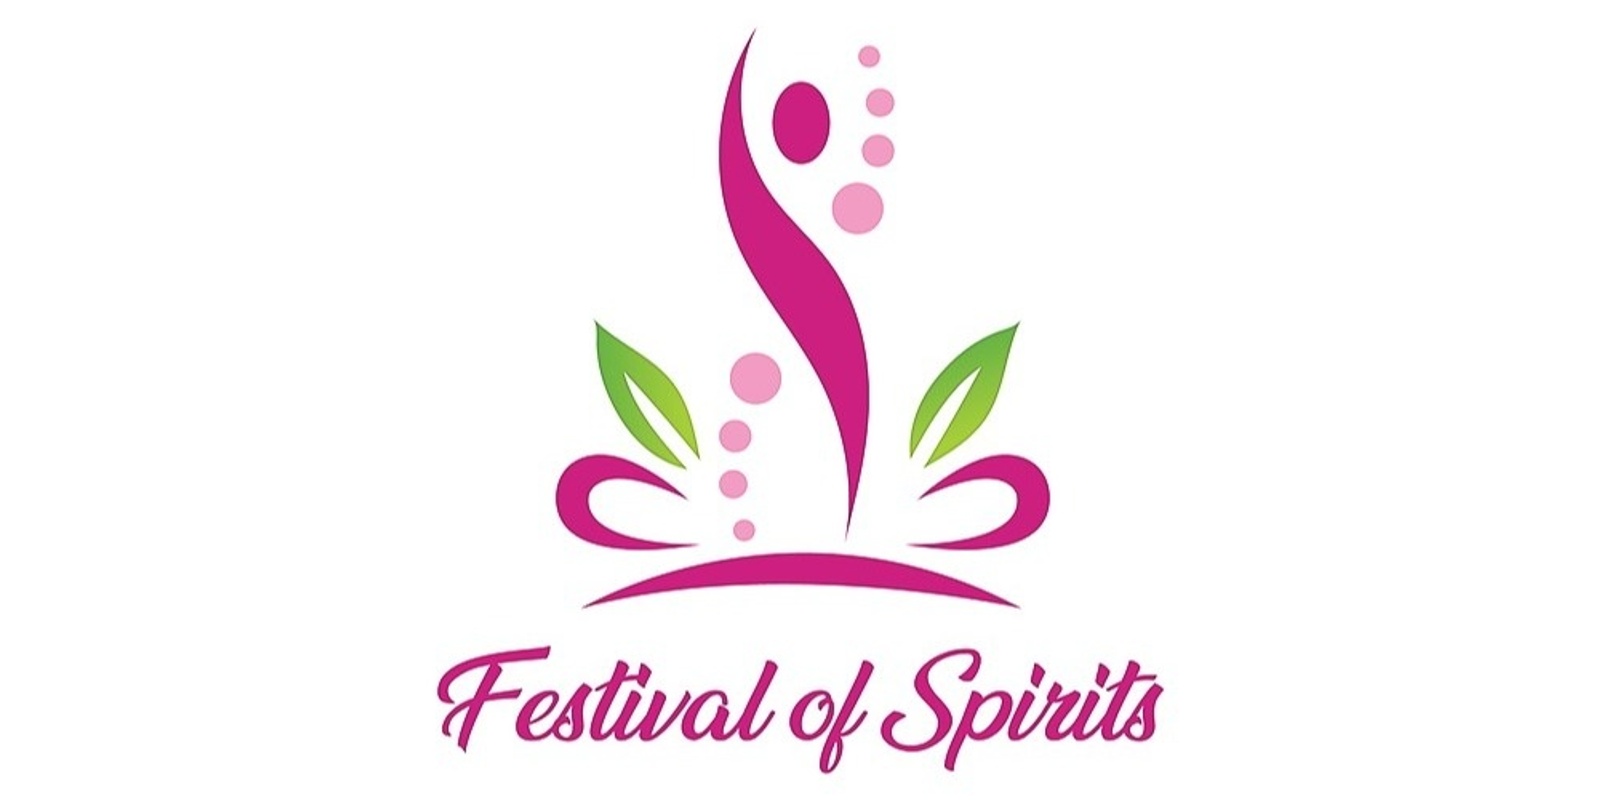 Banner image for The Festival of Spirits